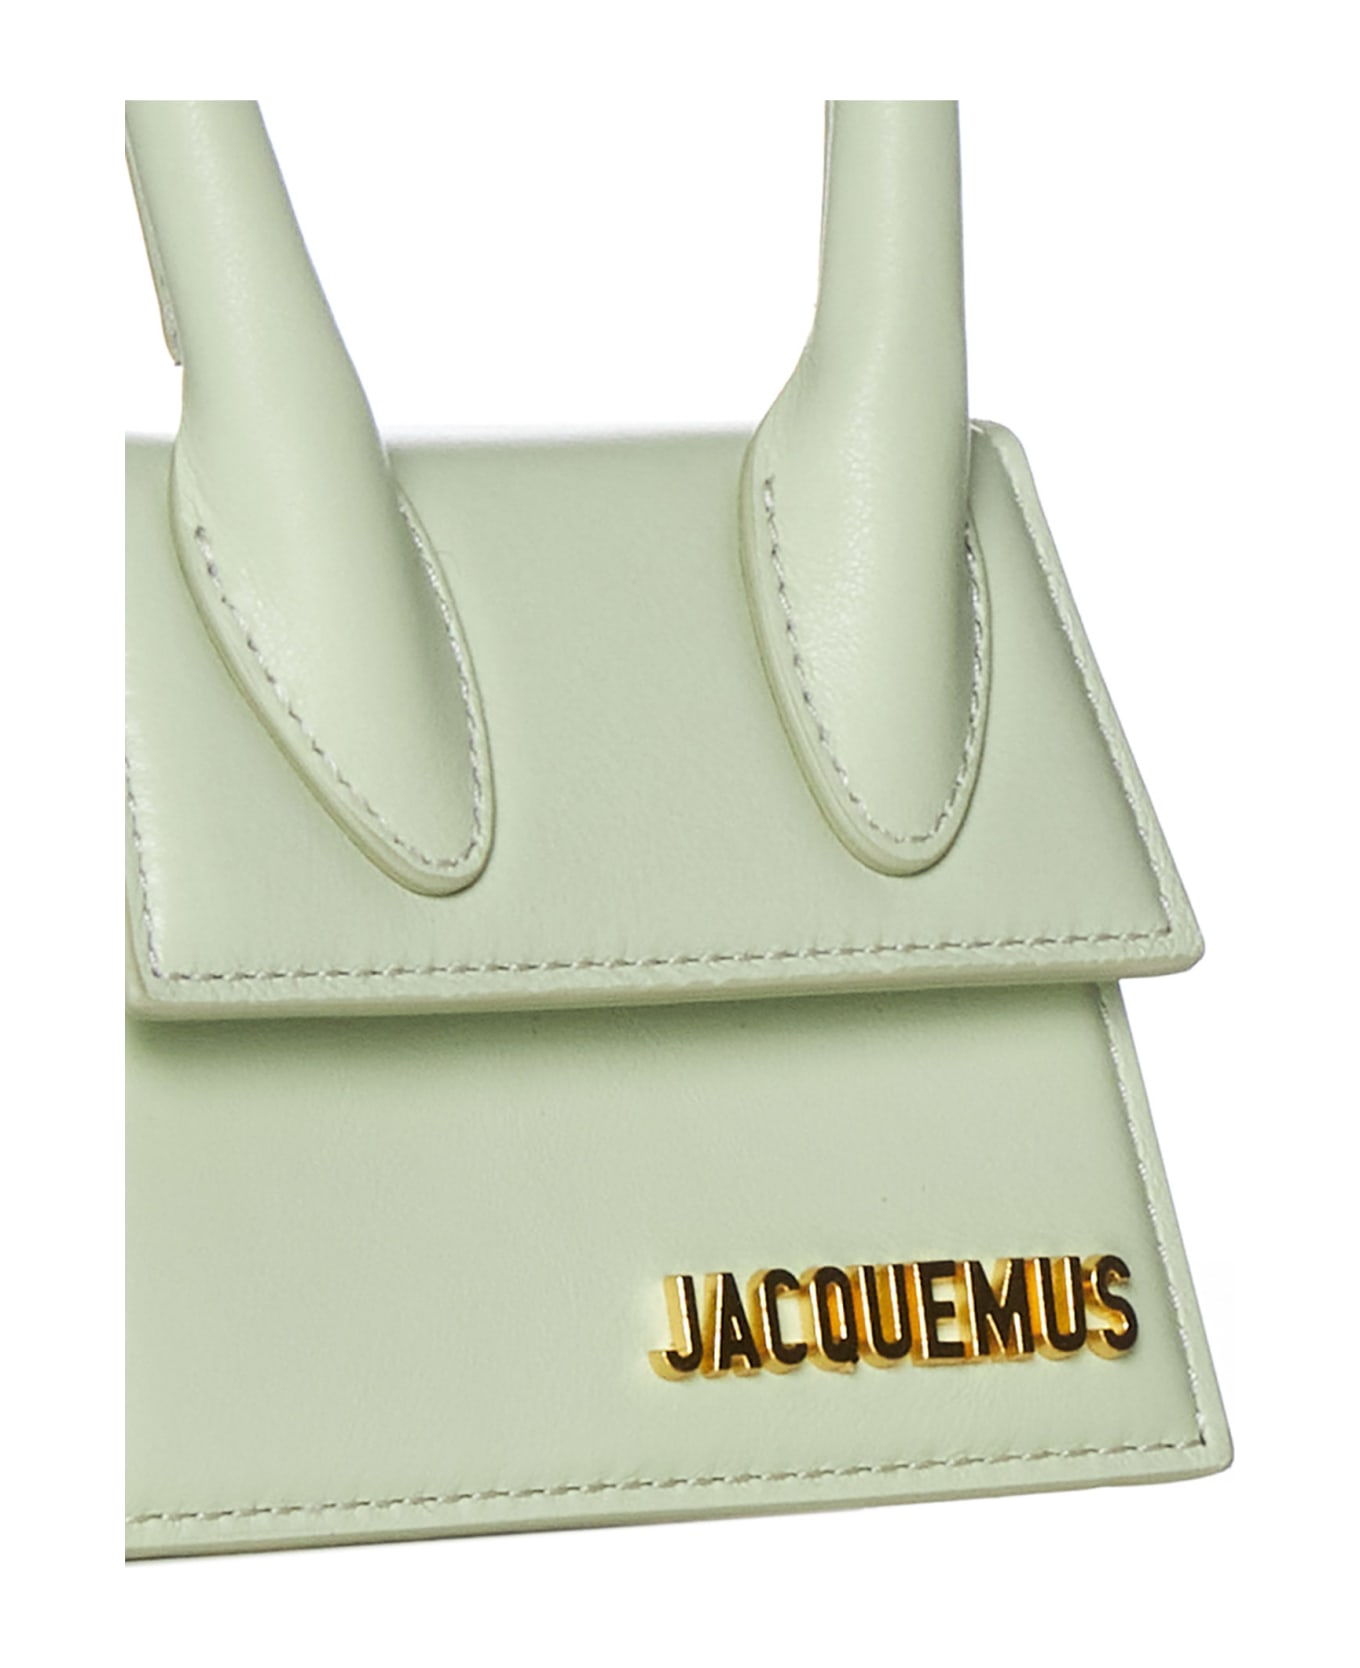 Jacquemus Tote - Light green